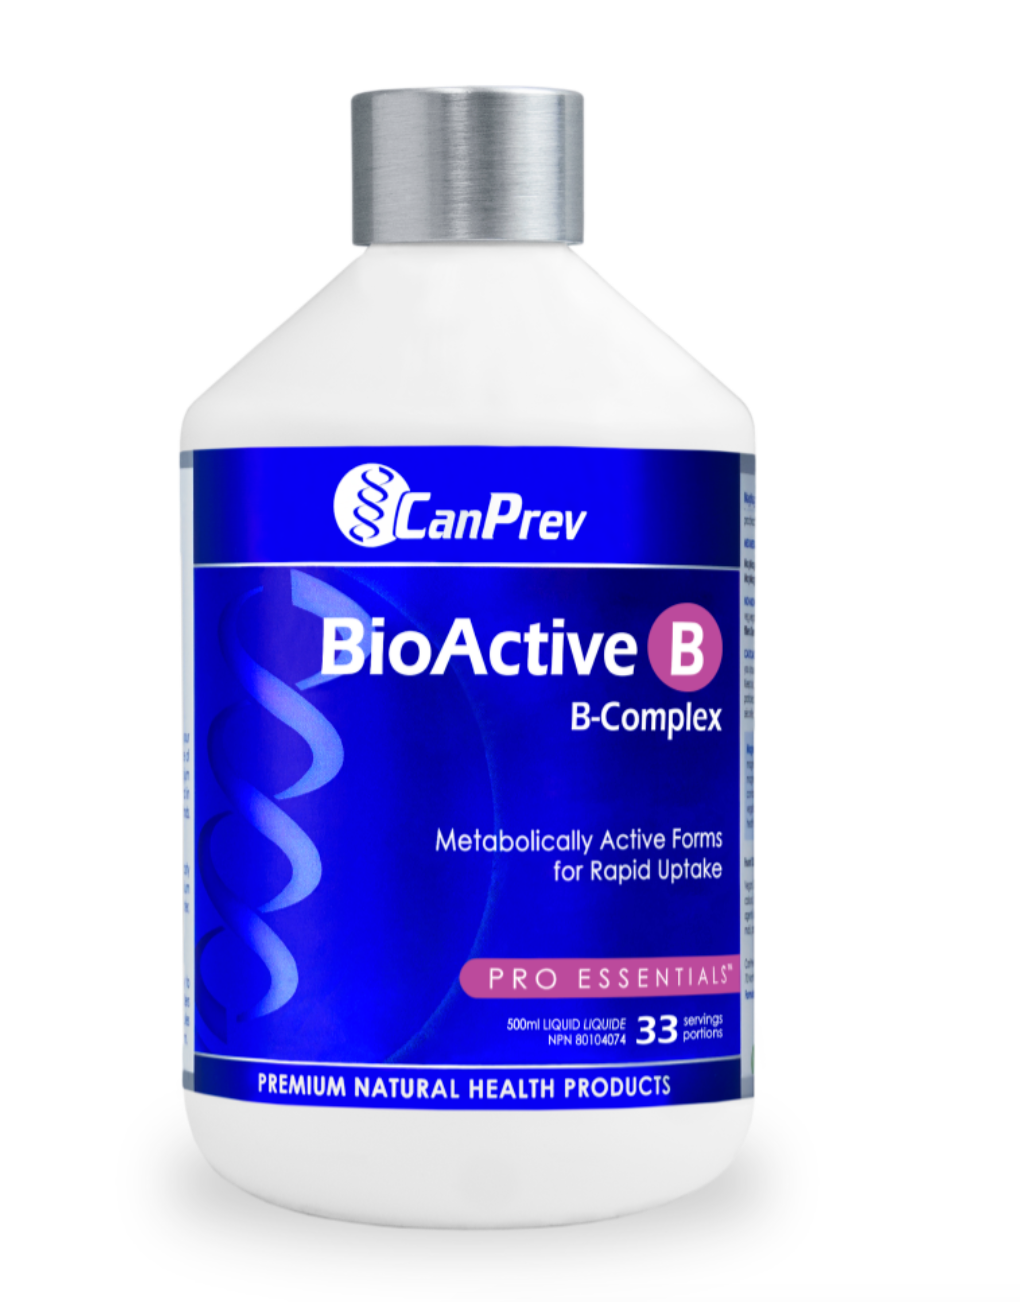 CanPrev BioActive B